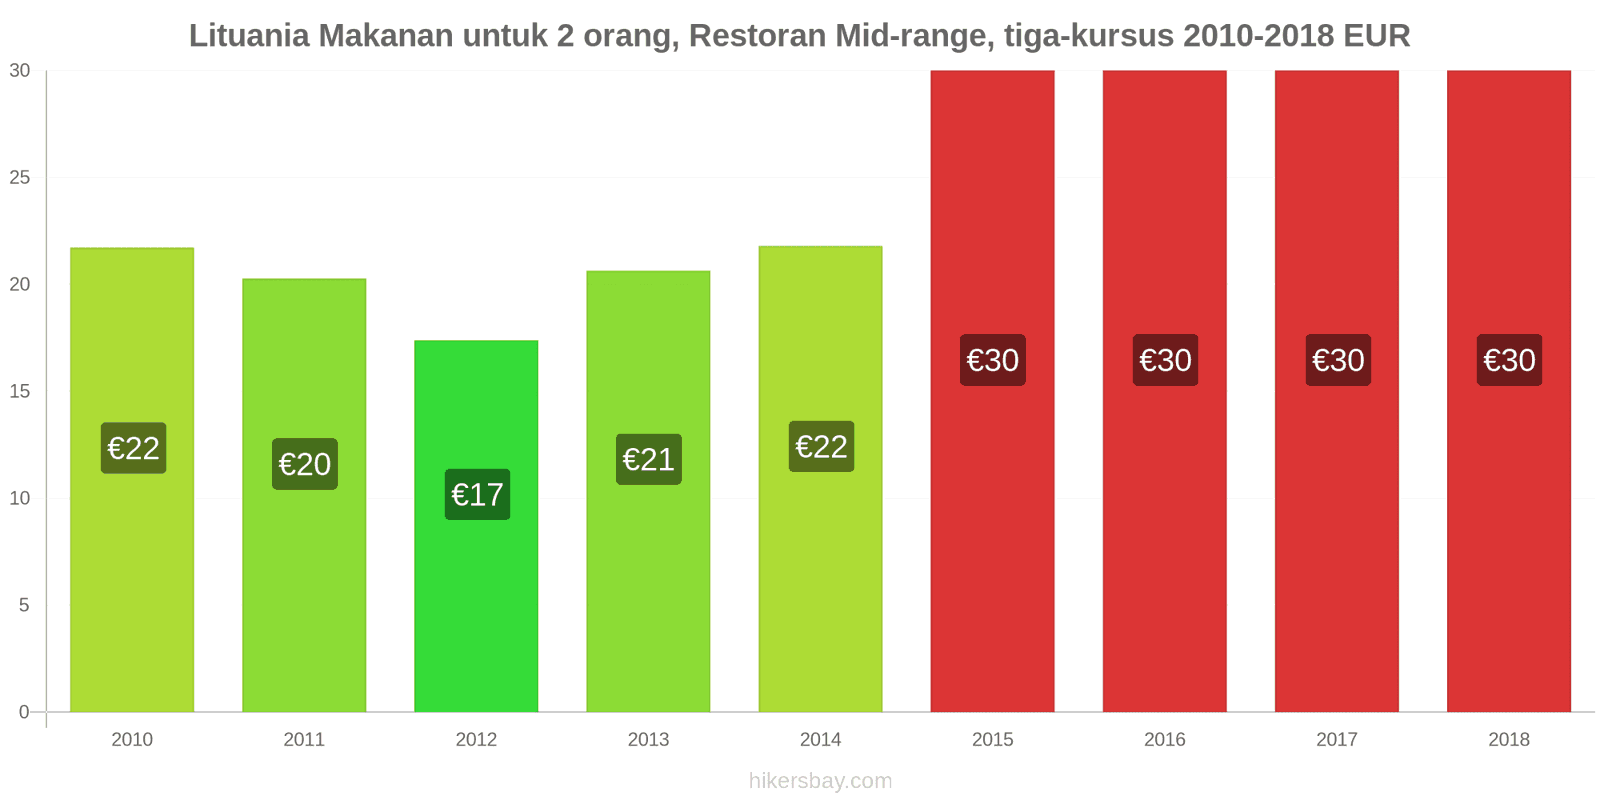 Lituania perubahan harga Makanan untuk 2 orang, Restoran kelas menengah, tiga kursus hikersbay.com